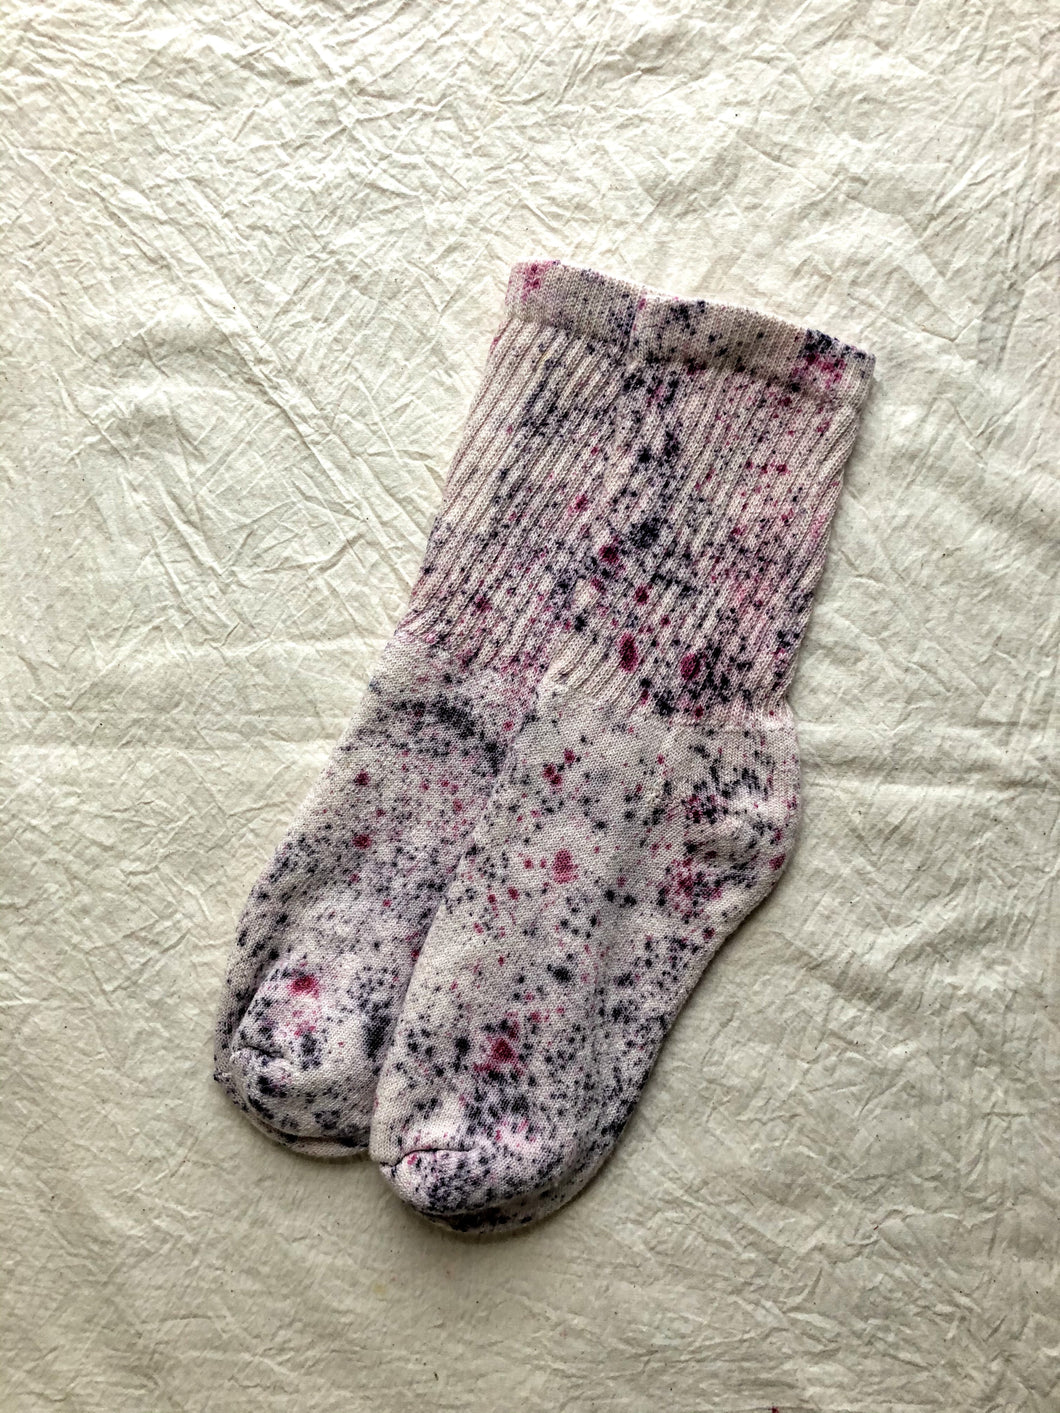 Botanical Dye Organic Cotton Socks - Berry Speckle - XS/S/M